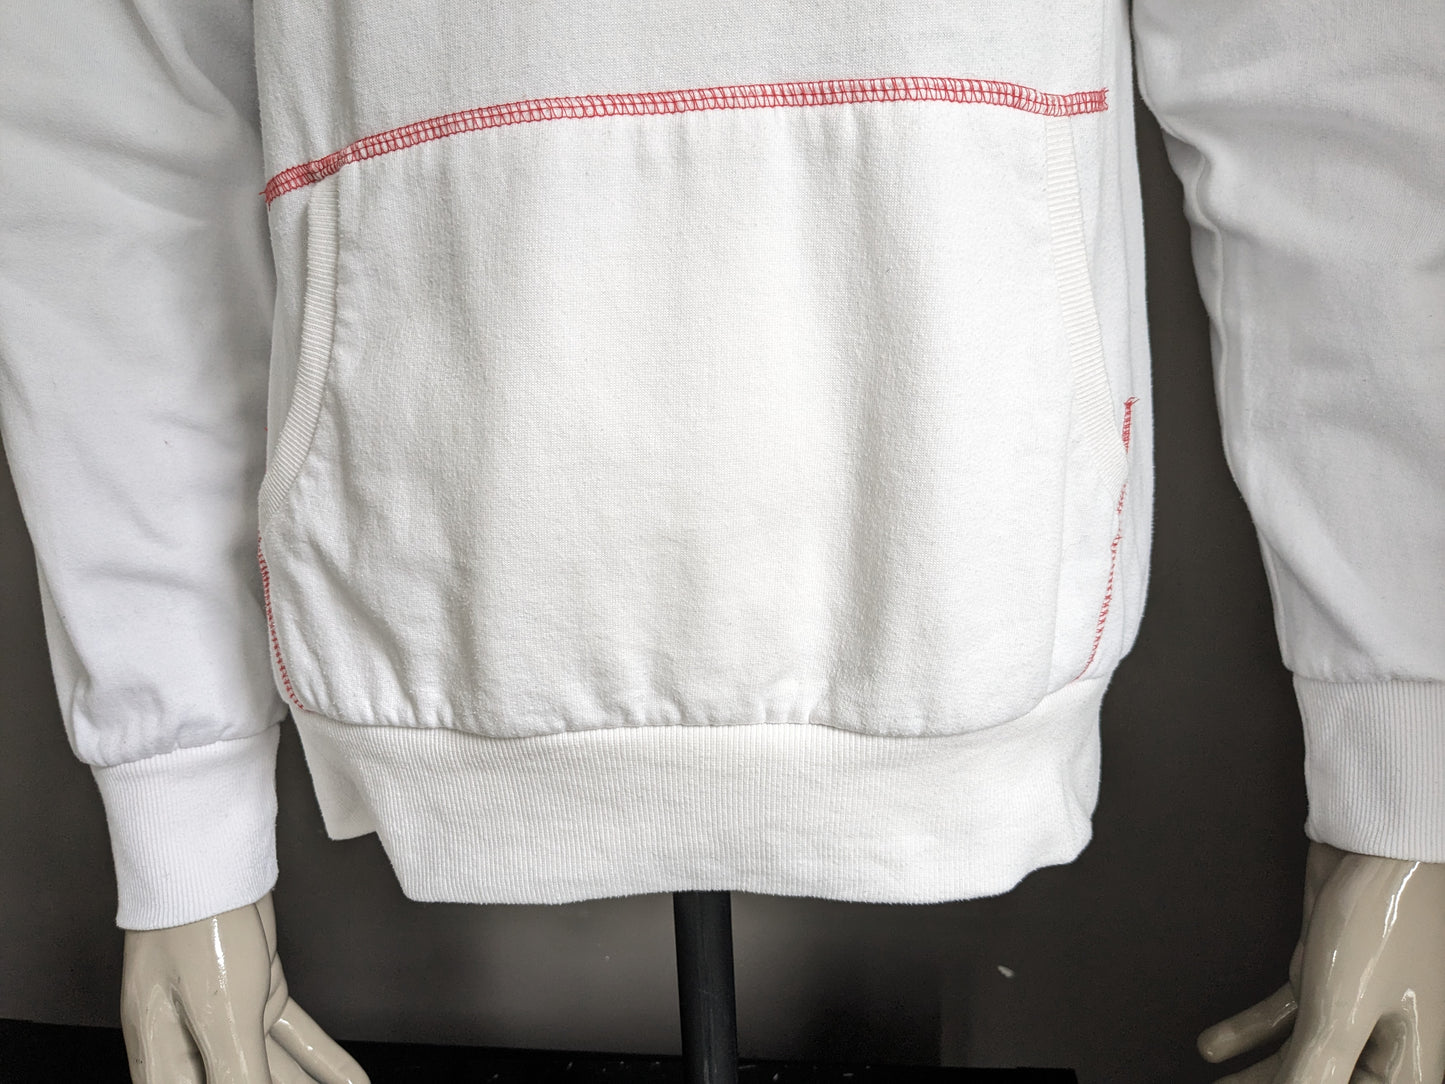 Camisa con capucha wilson. Blanco - rojo. Tamaño m.